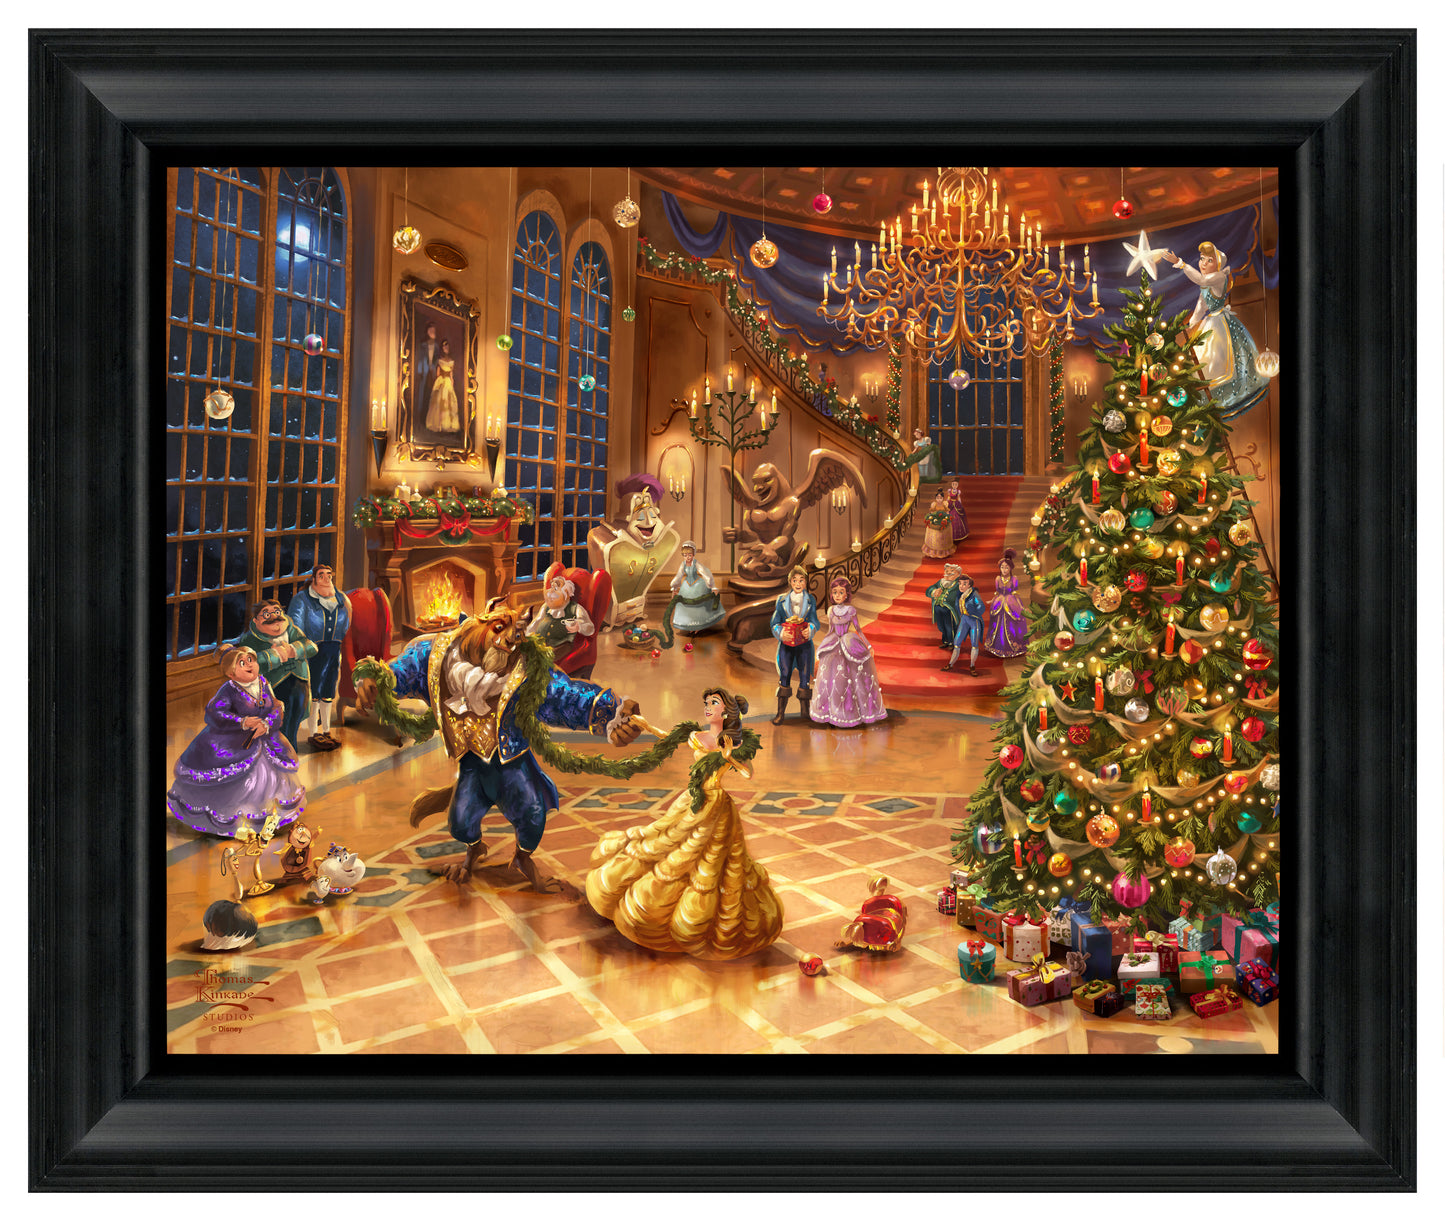 158456_f_BSV_Disney Beauty and the Beast Christmas Celebration_16x20_frame.jpg